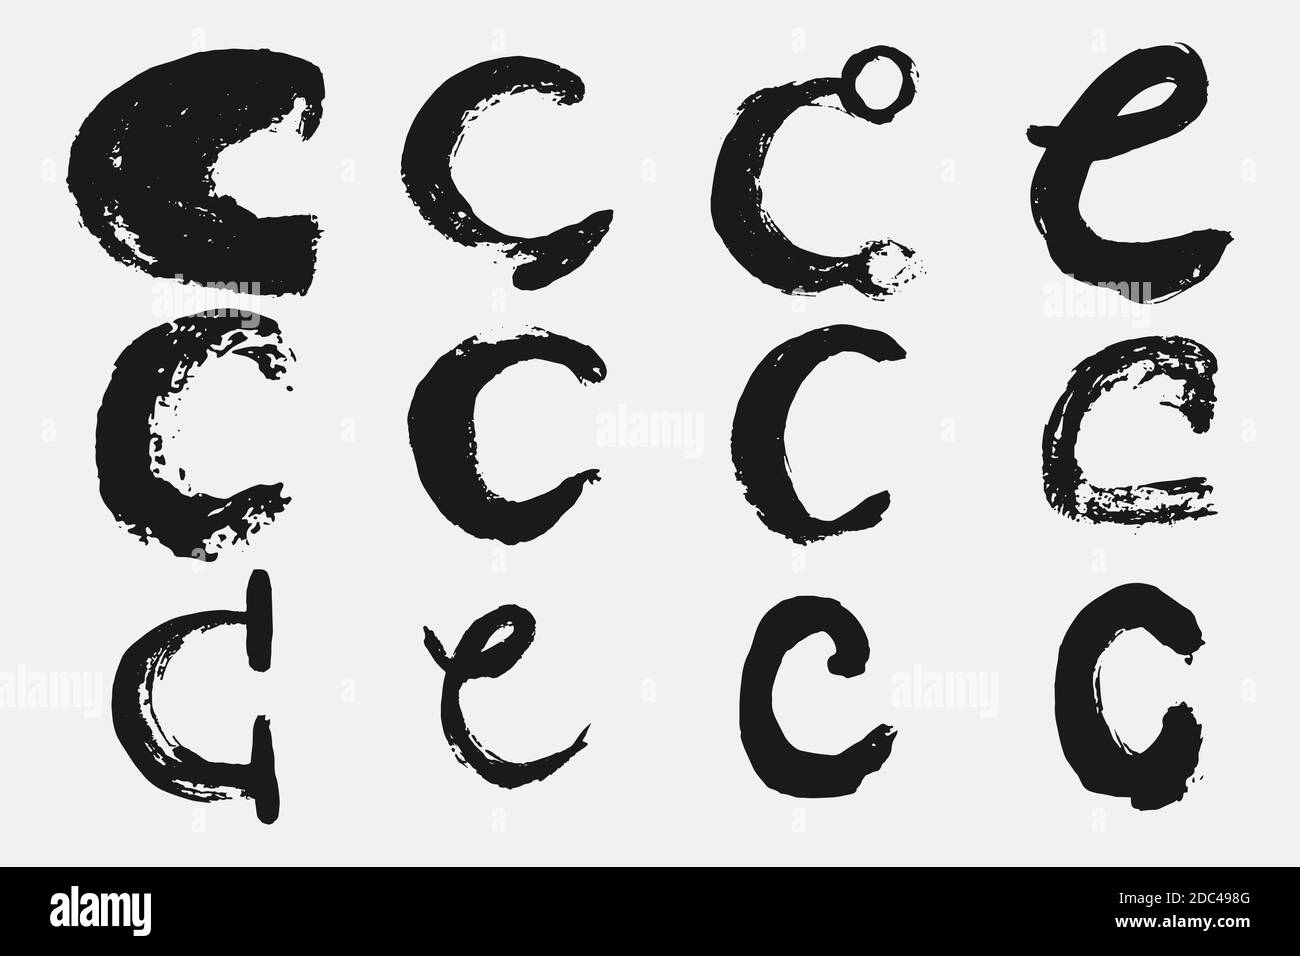 Black letter C written in grunge calligraphy. Stock Vector